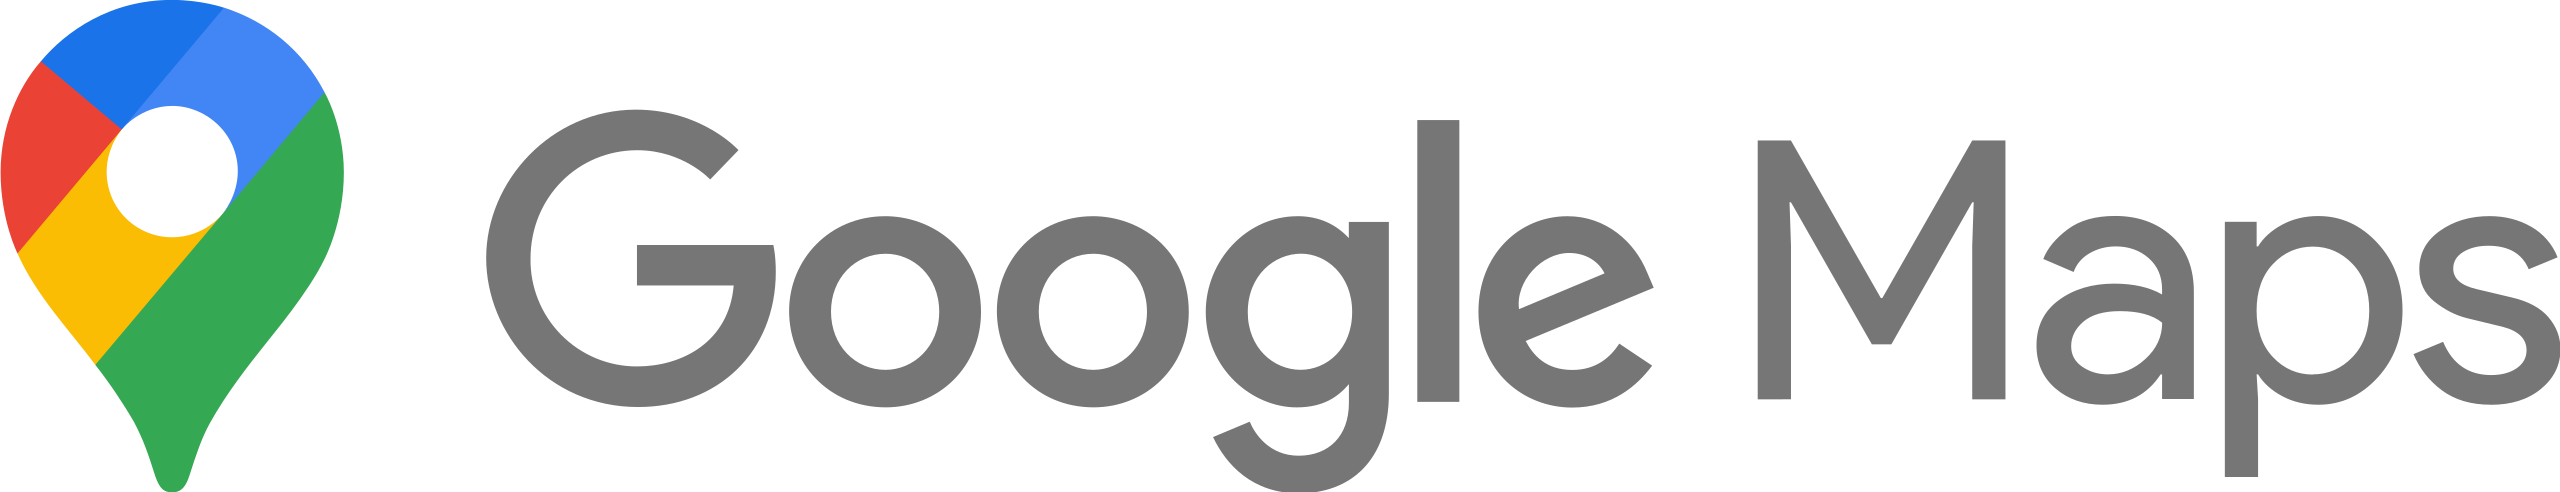 2560px-Google_Maps_Logo.svg